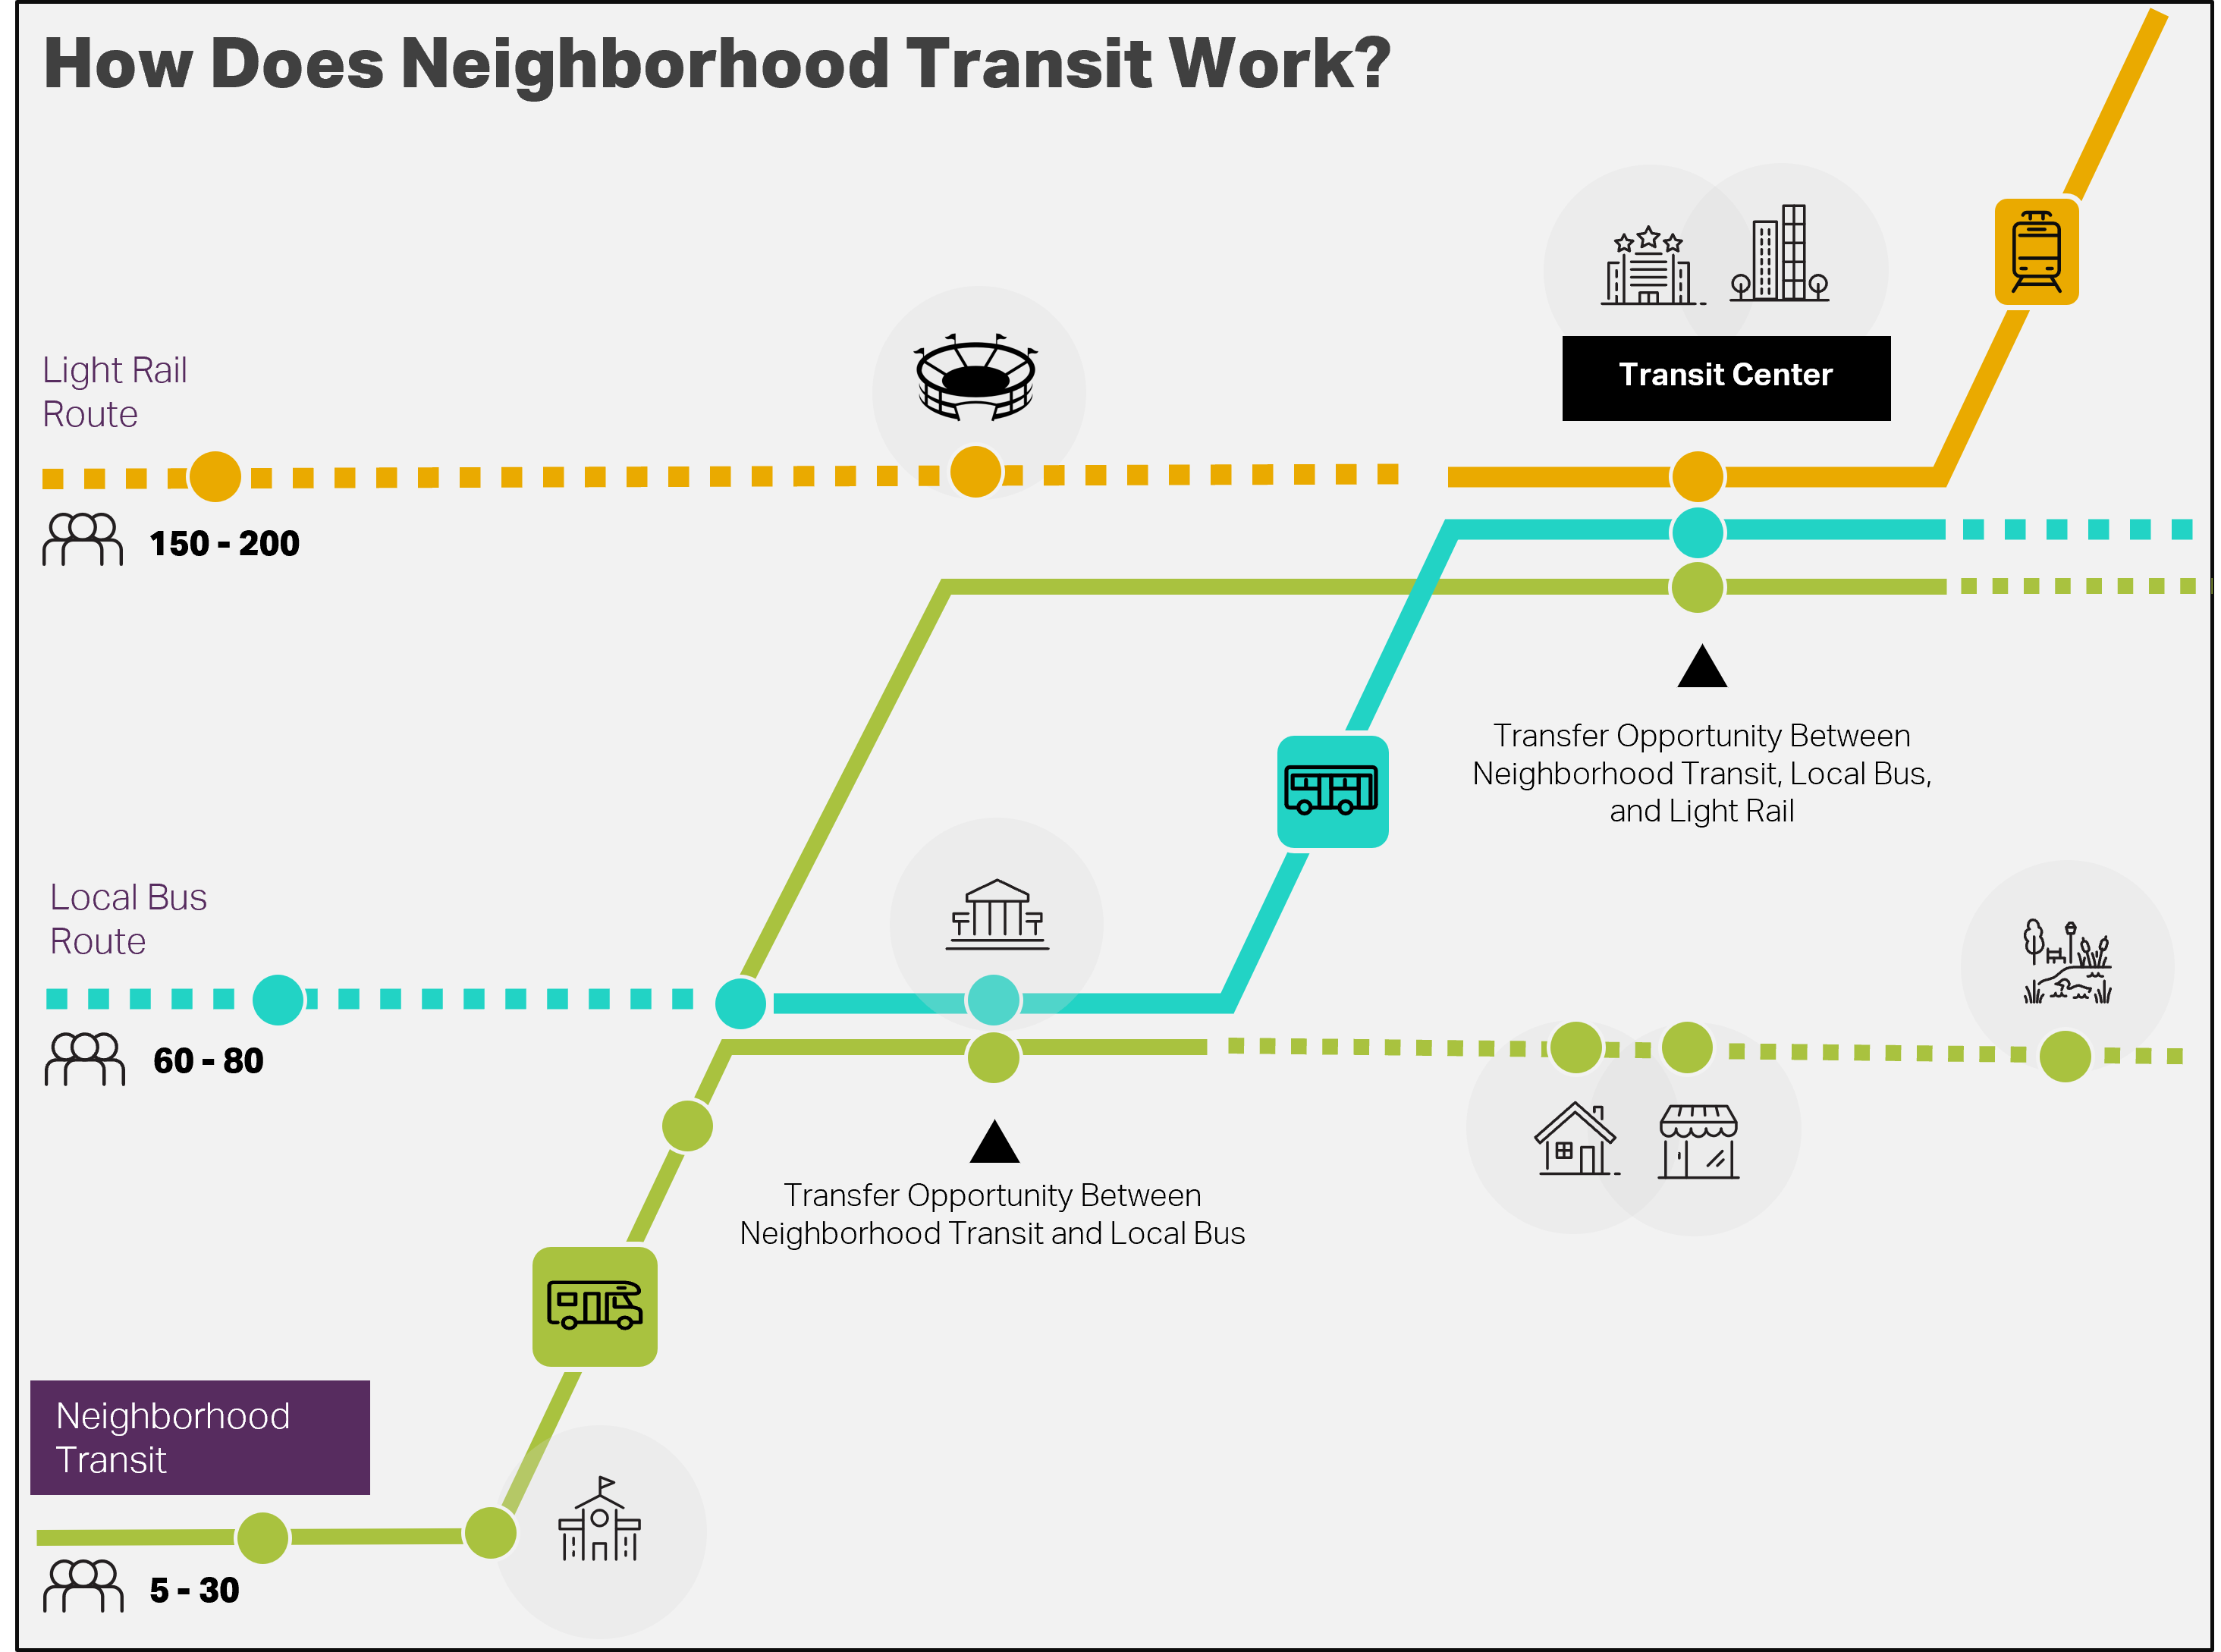 How Does Neighborhood Transit Work?